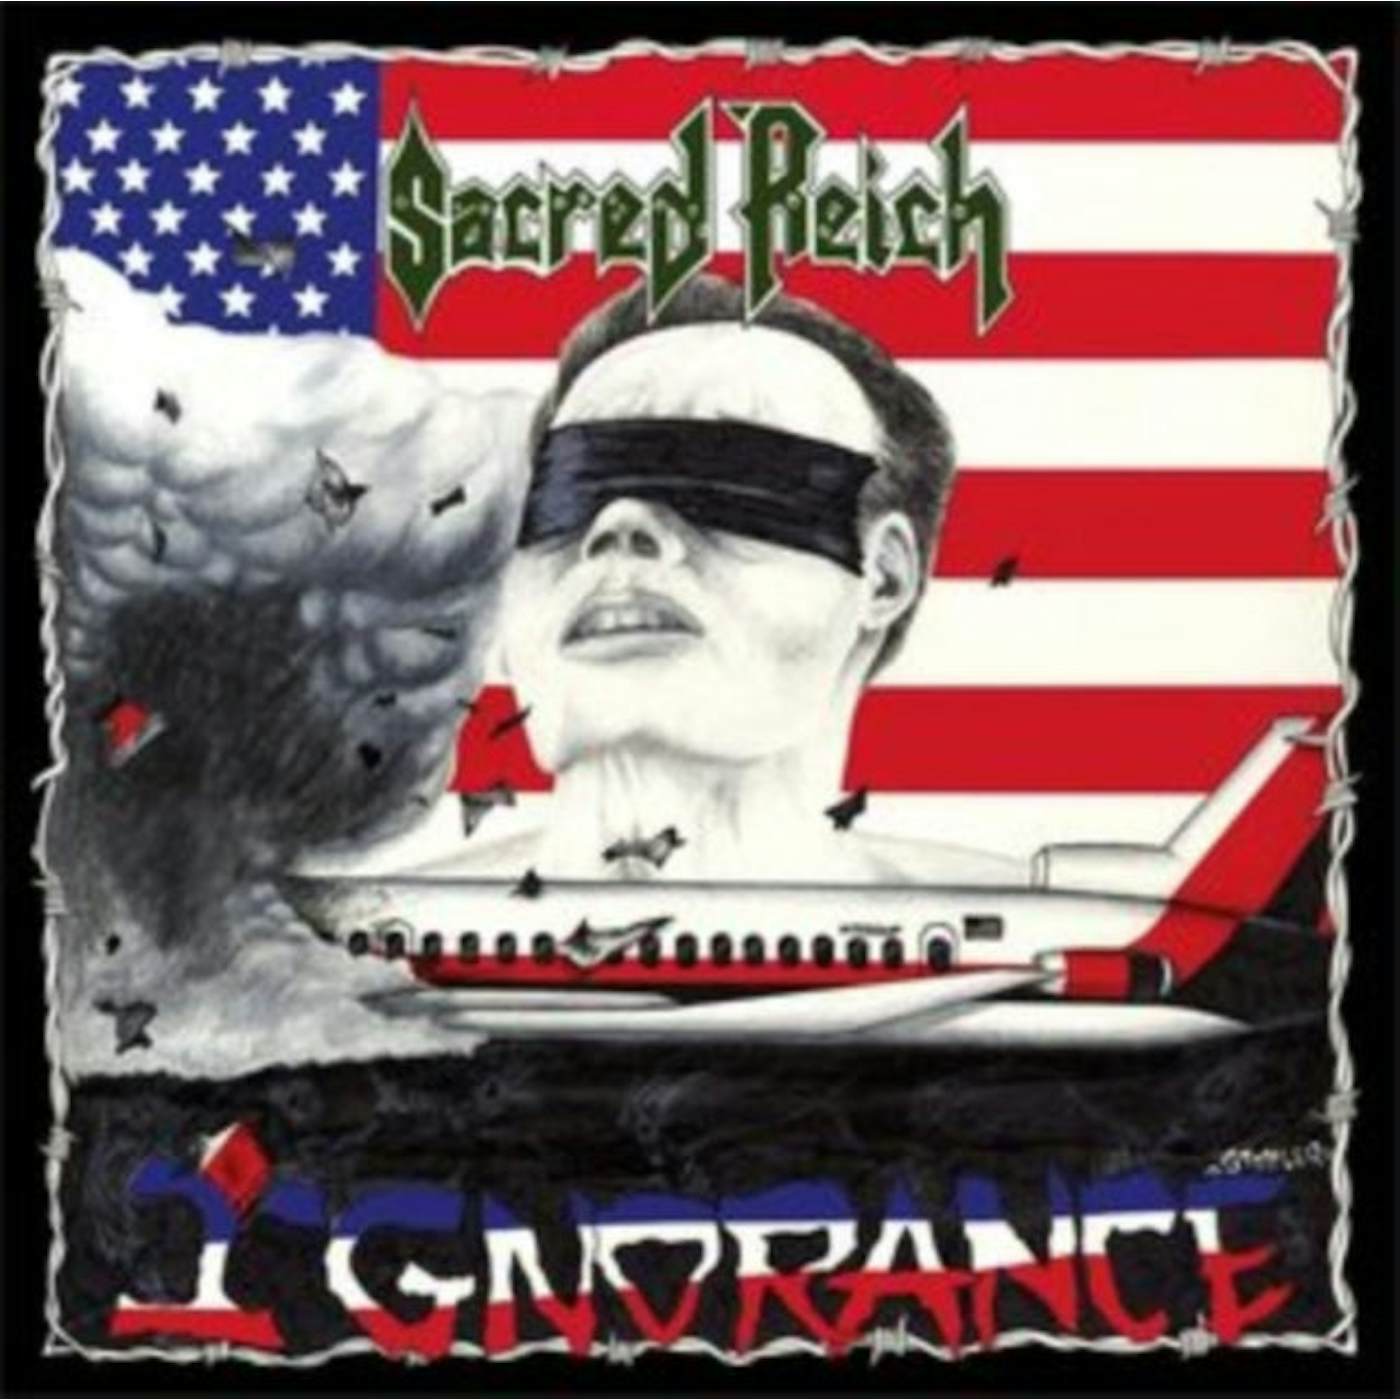 Sacred Reich LP - Ignorance (Vinyl)